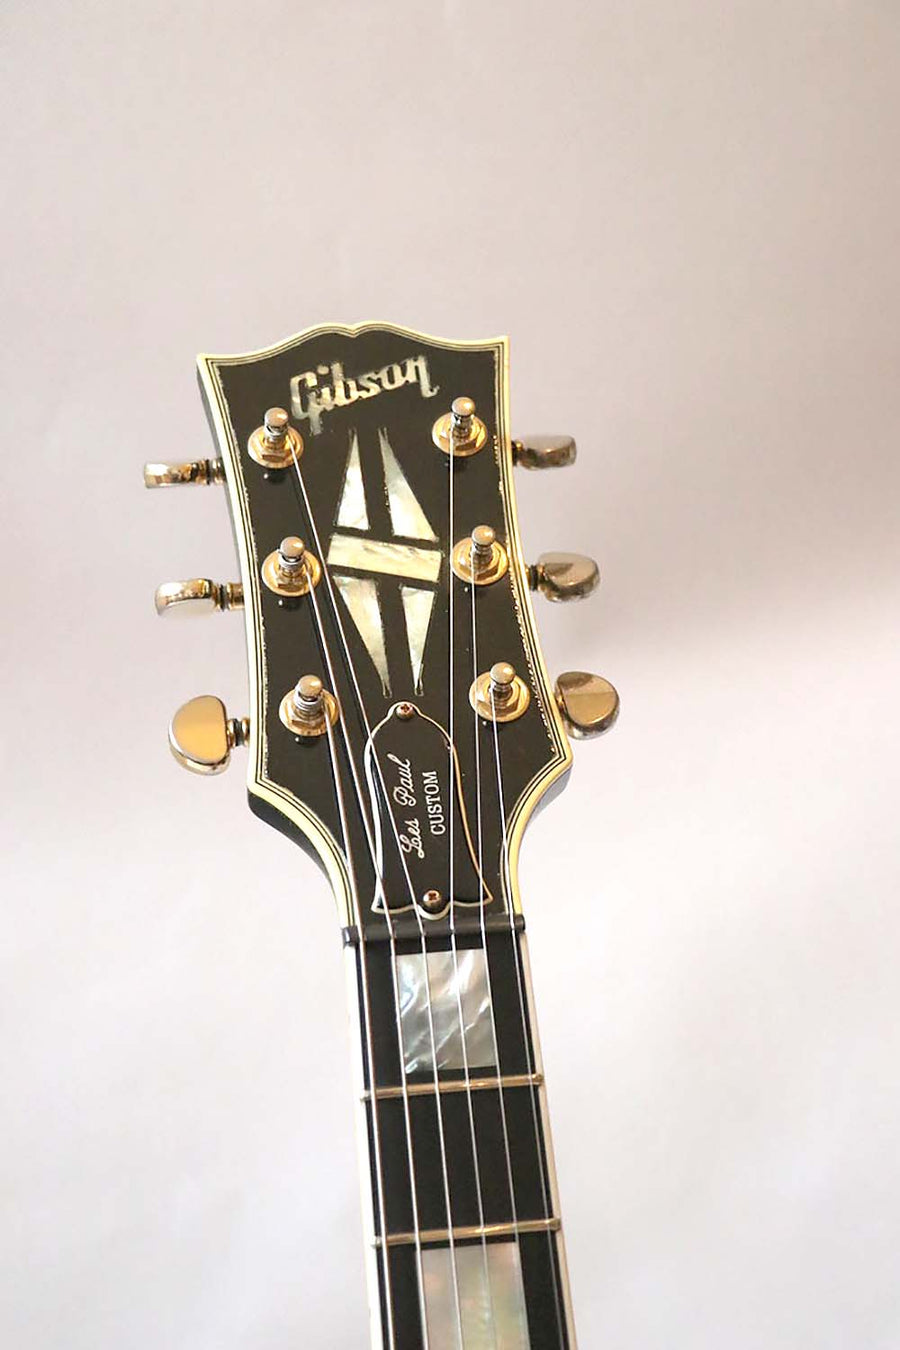 Gibson Les Paul Custom 1996